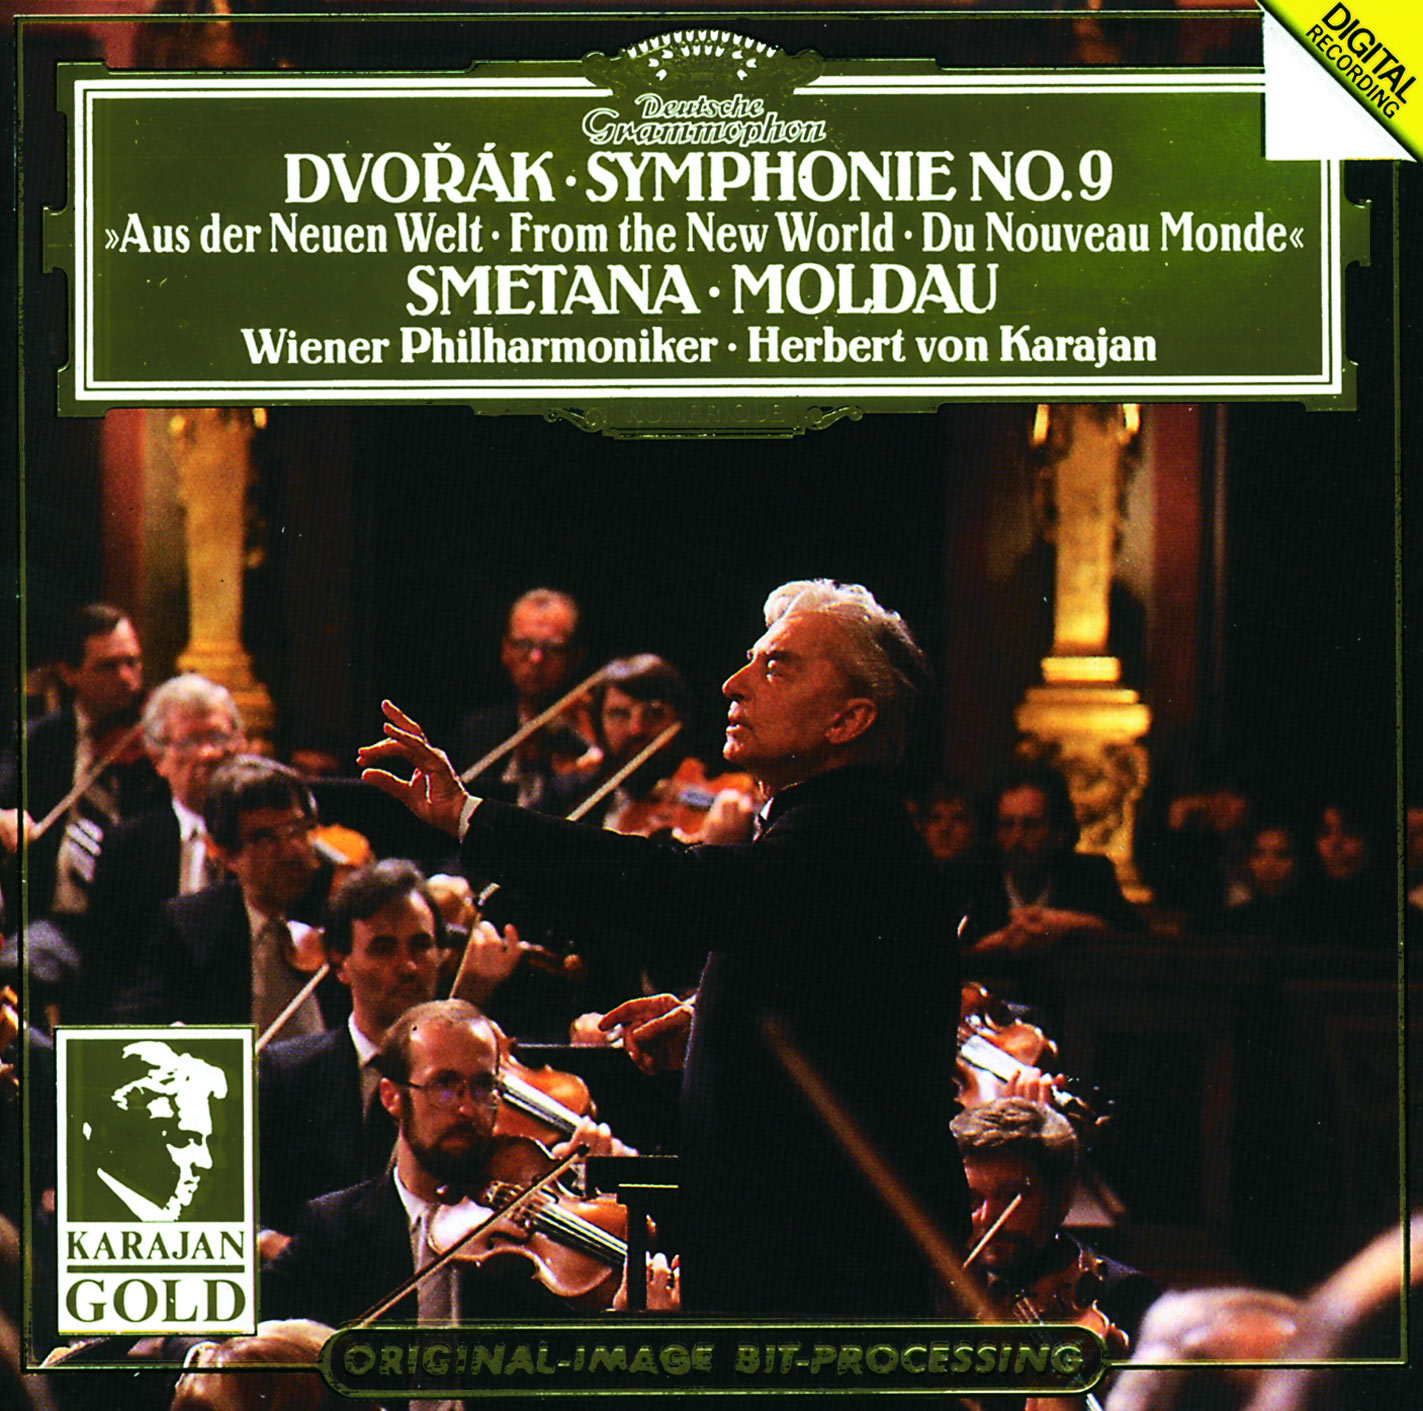 Dvorák: Symphony No. 9 in E Minor, Op. 95, B. 178